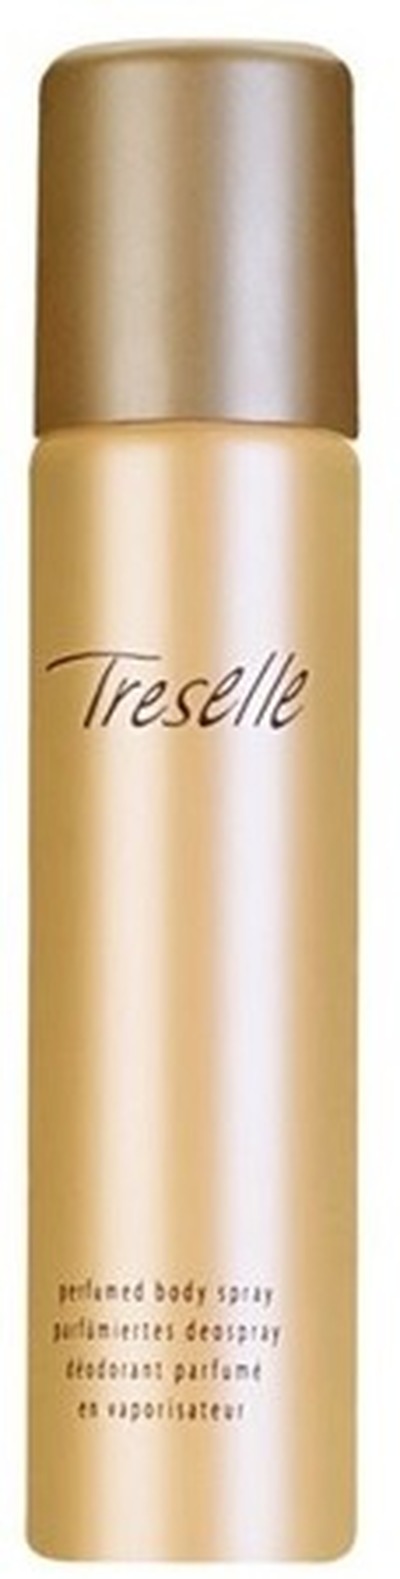 Avon Treselle dezodorant do ciala 75ml